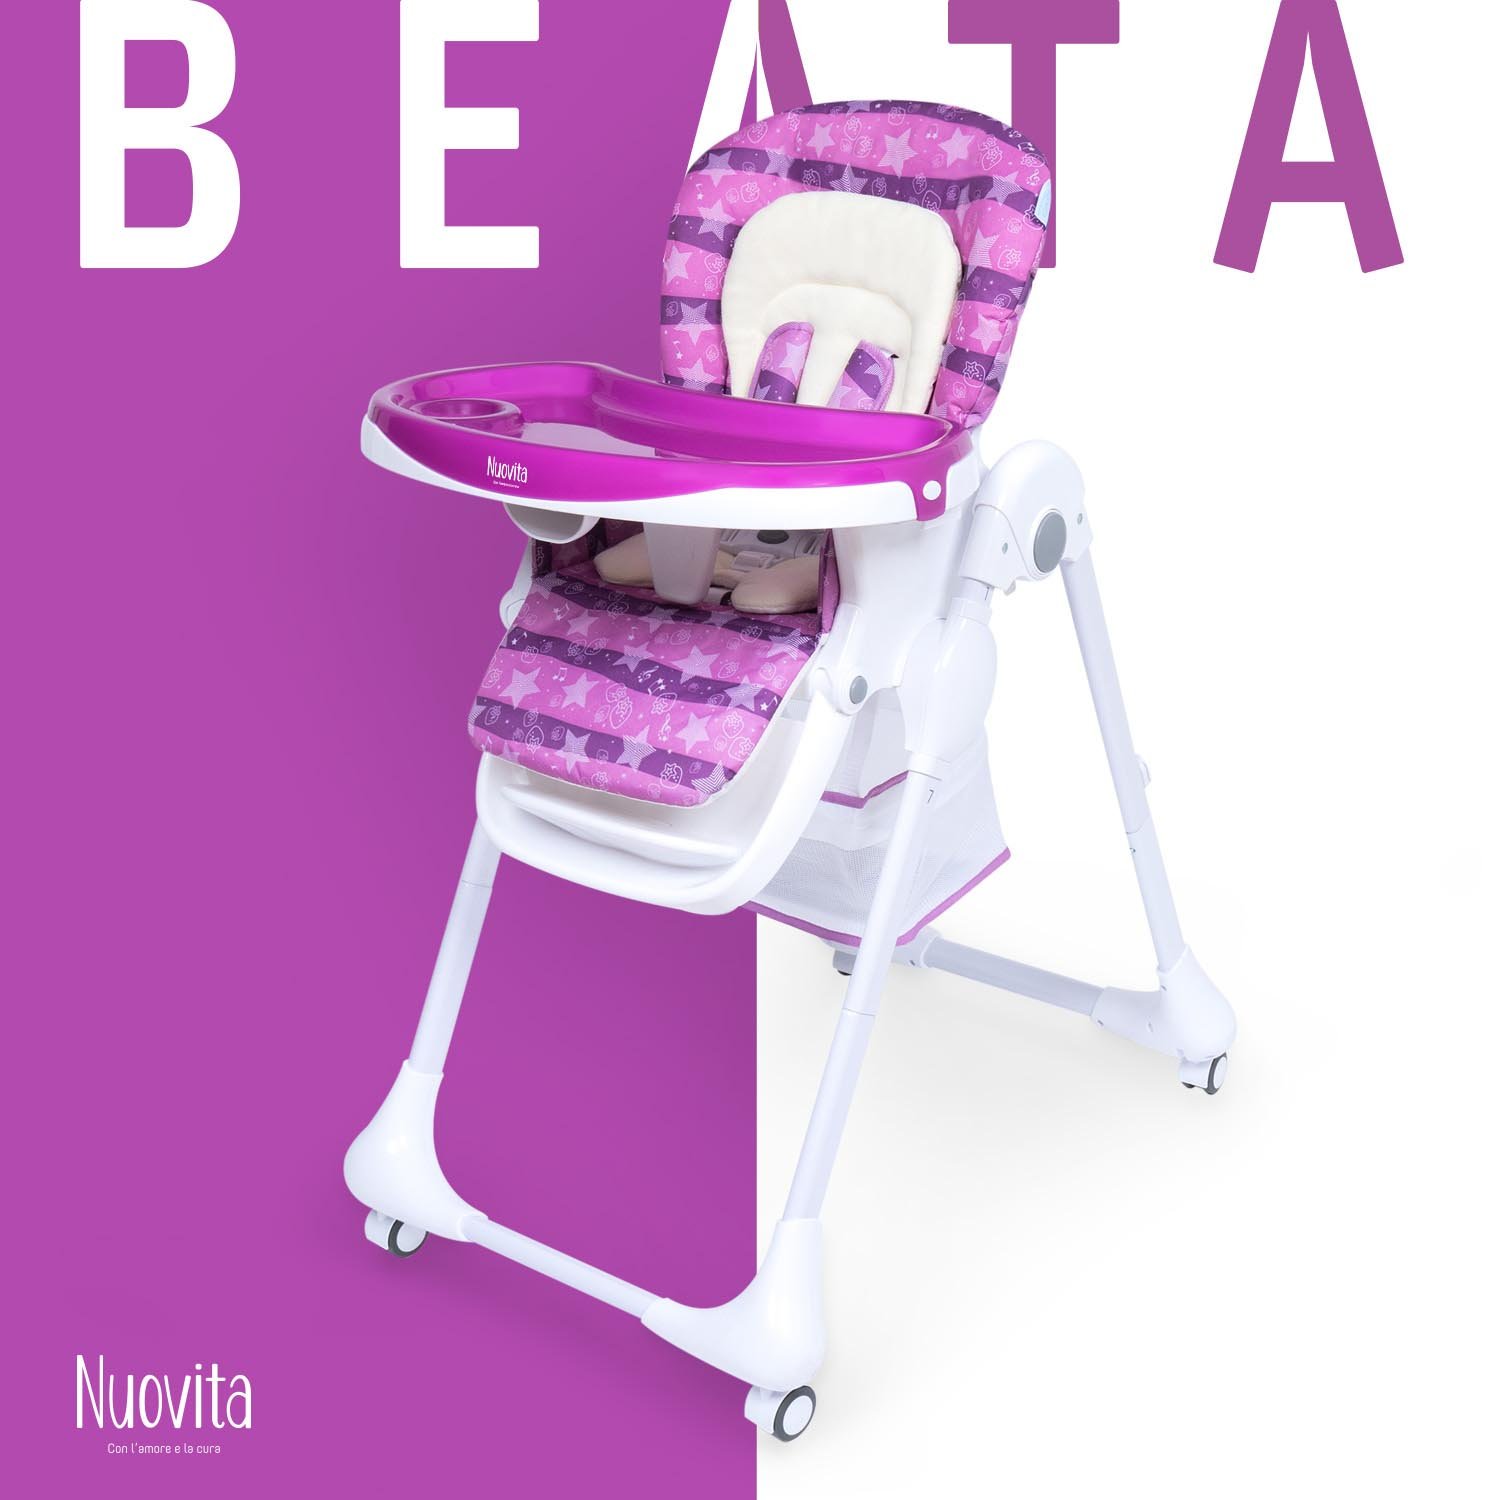 Стульчик для кормления Nuovita Beata (Notte lilla oxford) стульчик для кормления nuovita beata